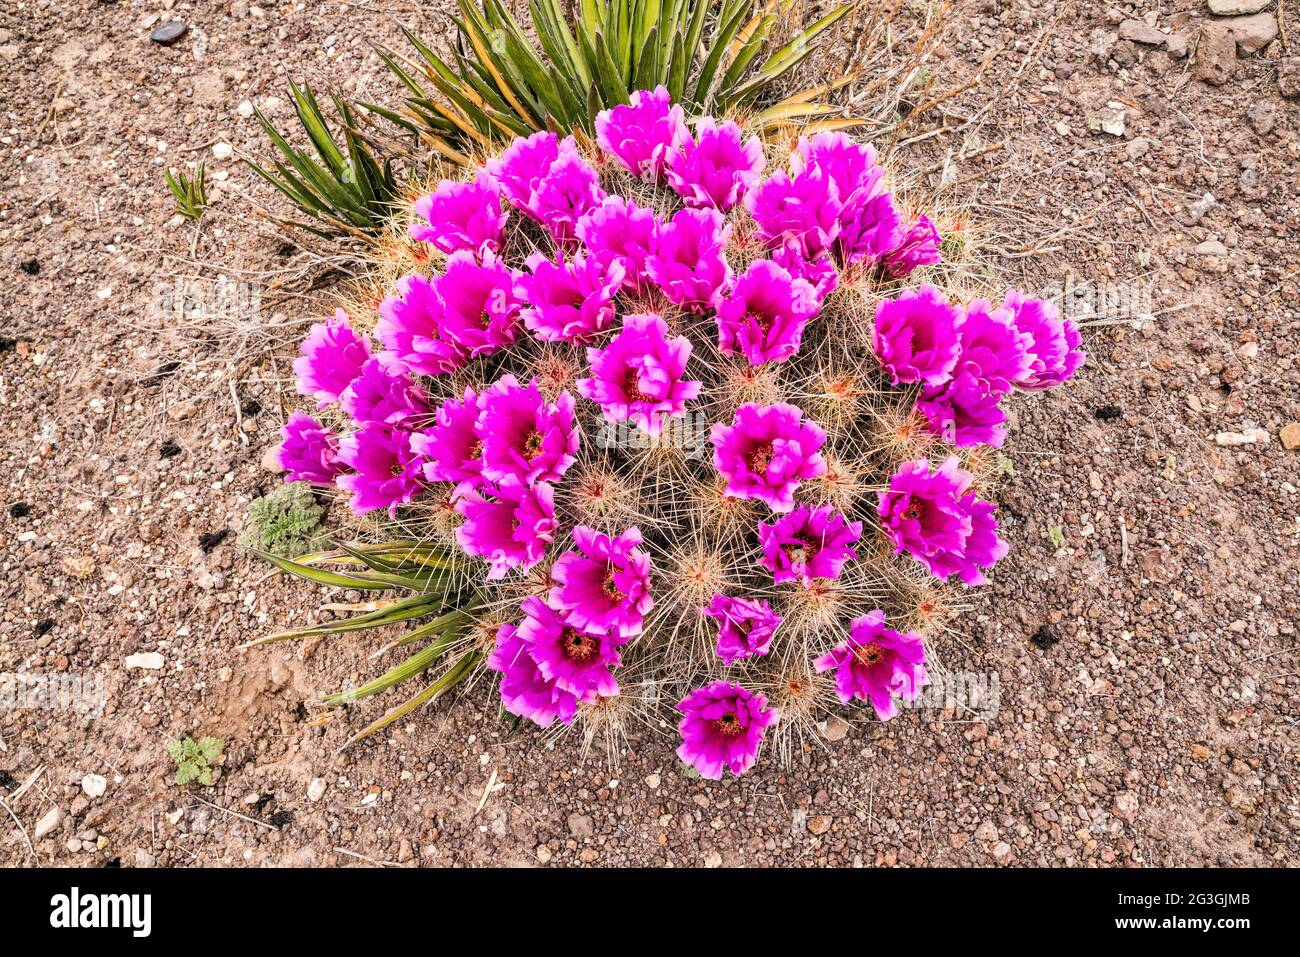 Strawberry Cactus in bloom, El Solitario area, Big Bend Ranch State Park, Texas, USA Stock Photo